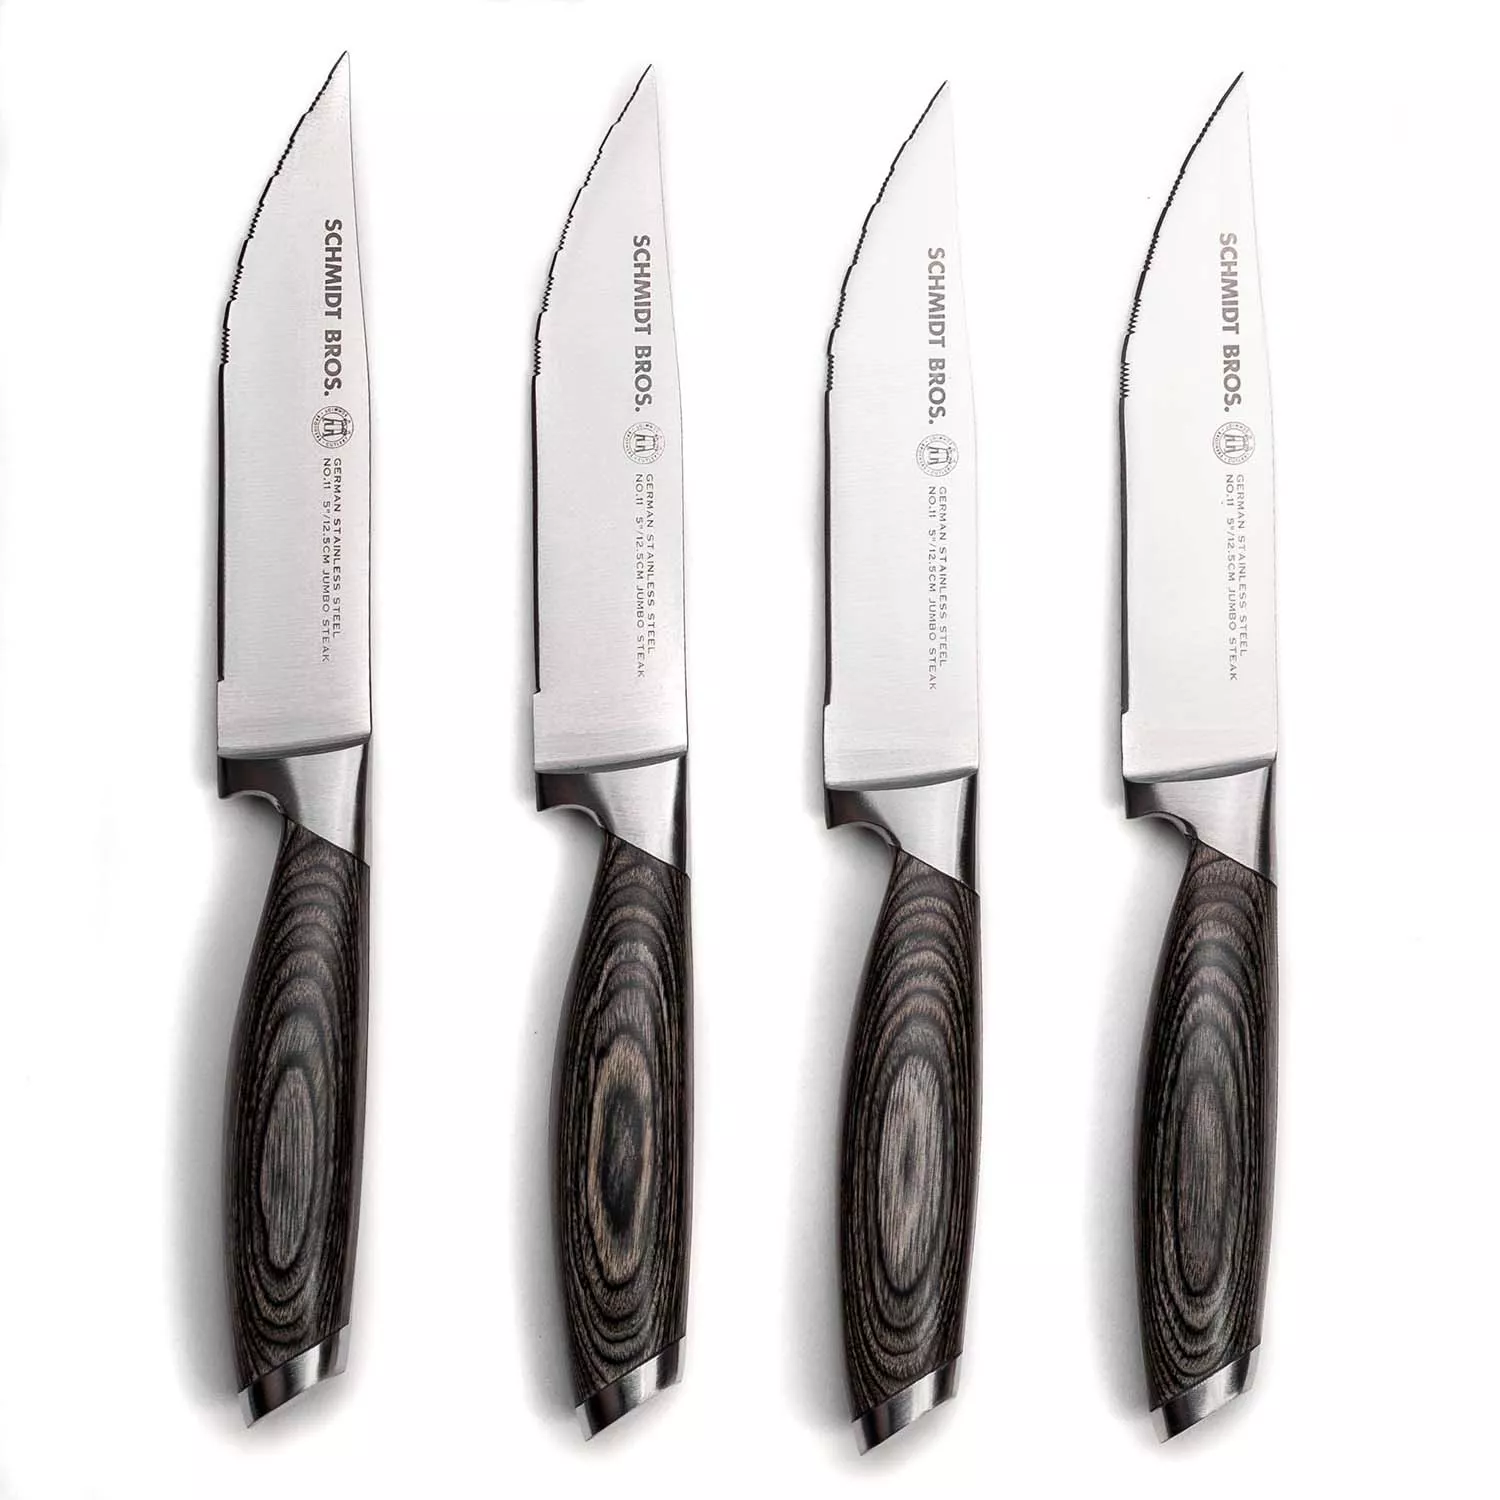 Schmidt Brothers Cutlery Bonded Ash Jumbo Steak Knives, Set of 4